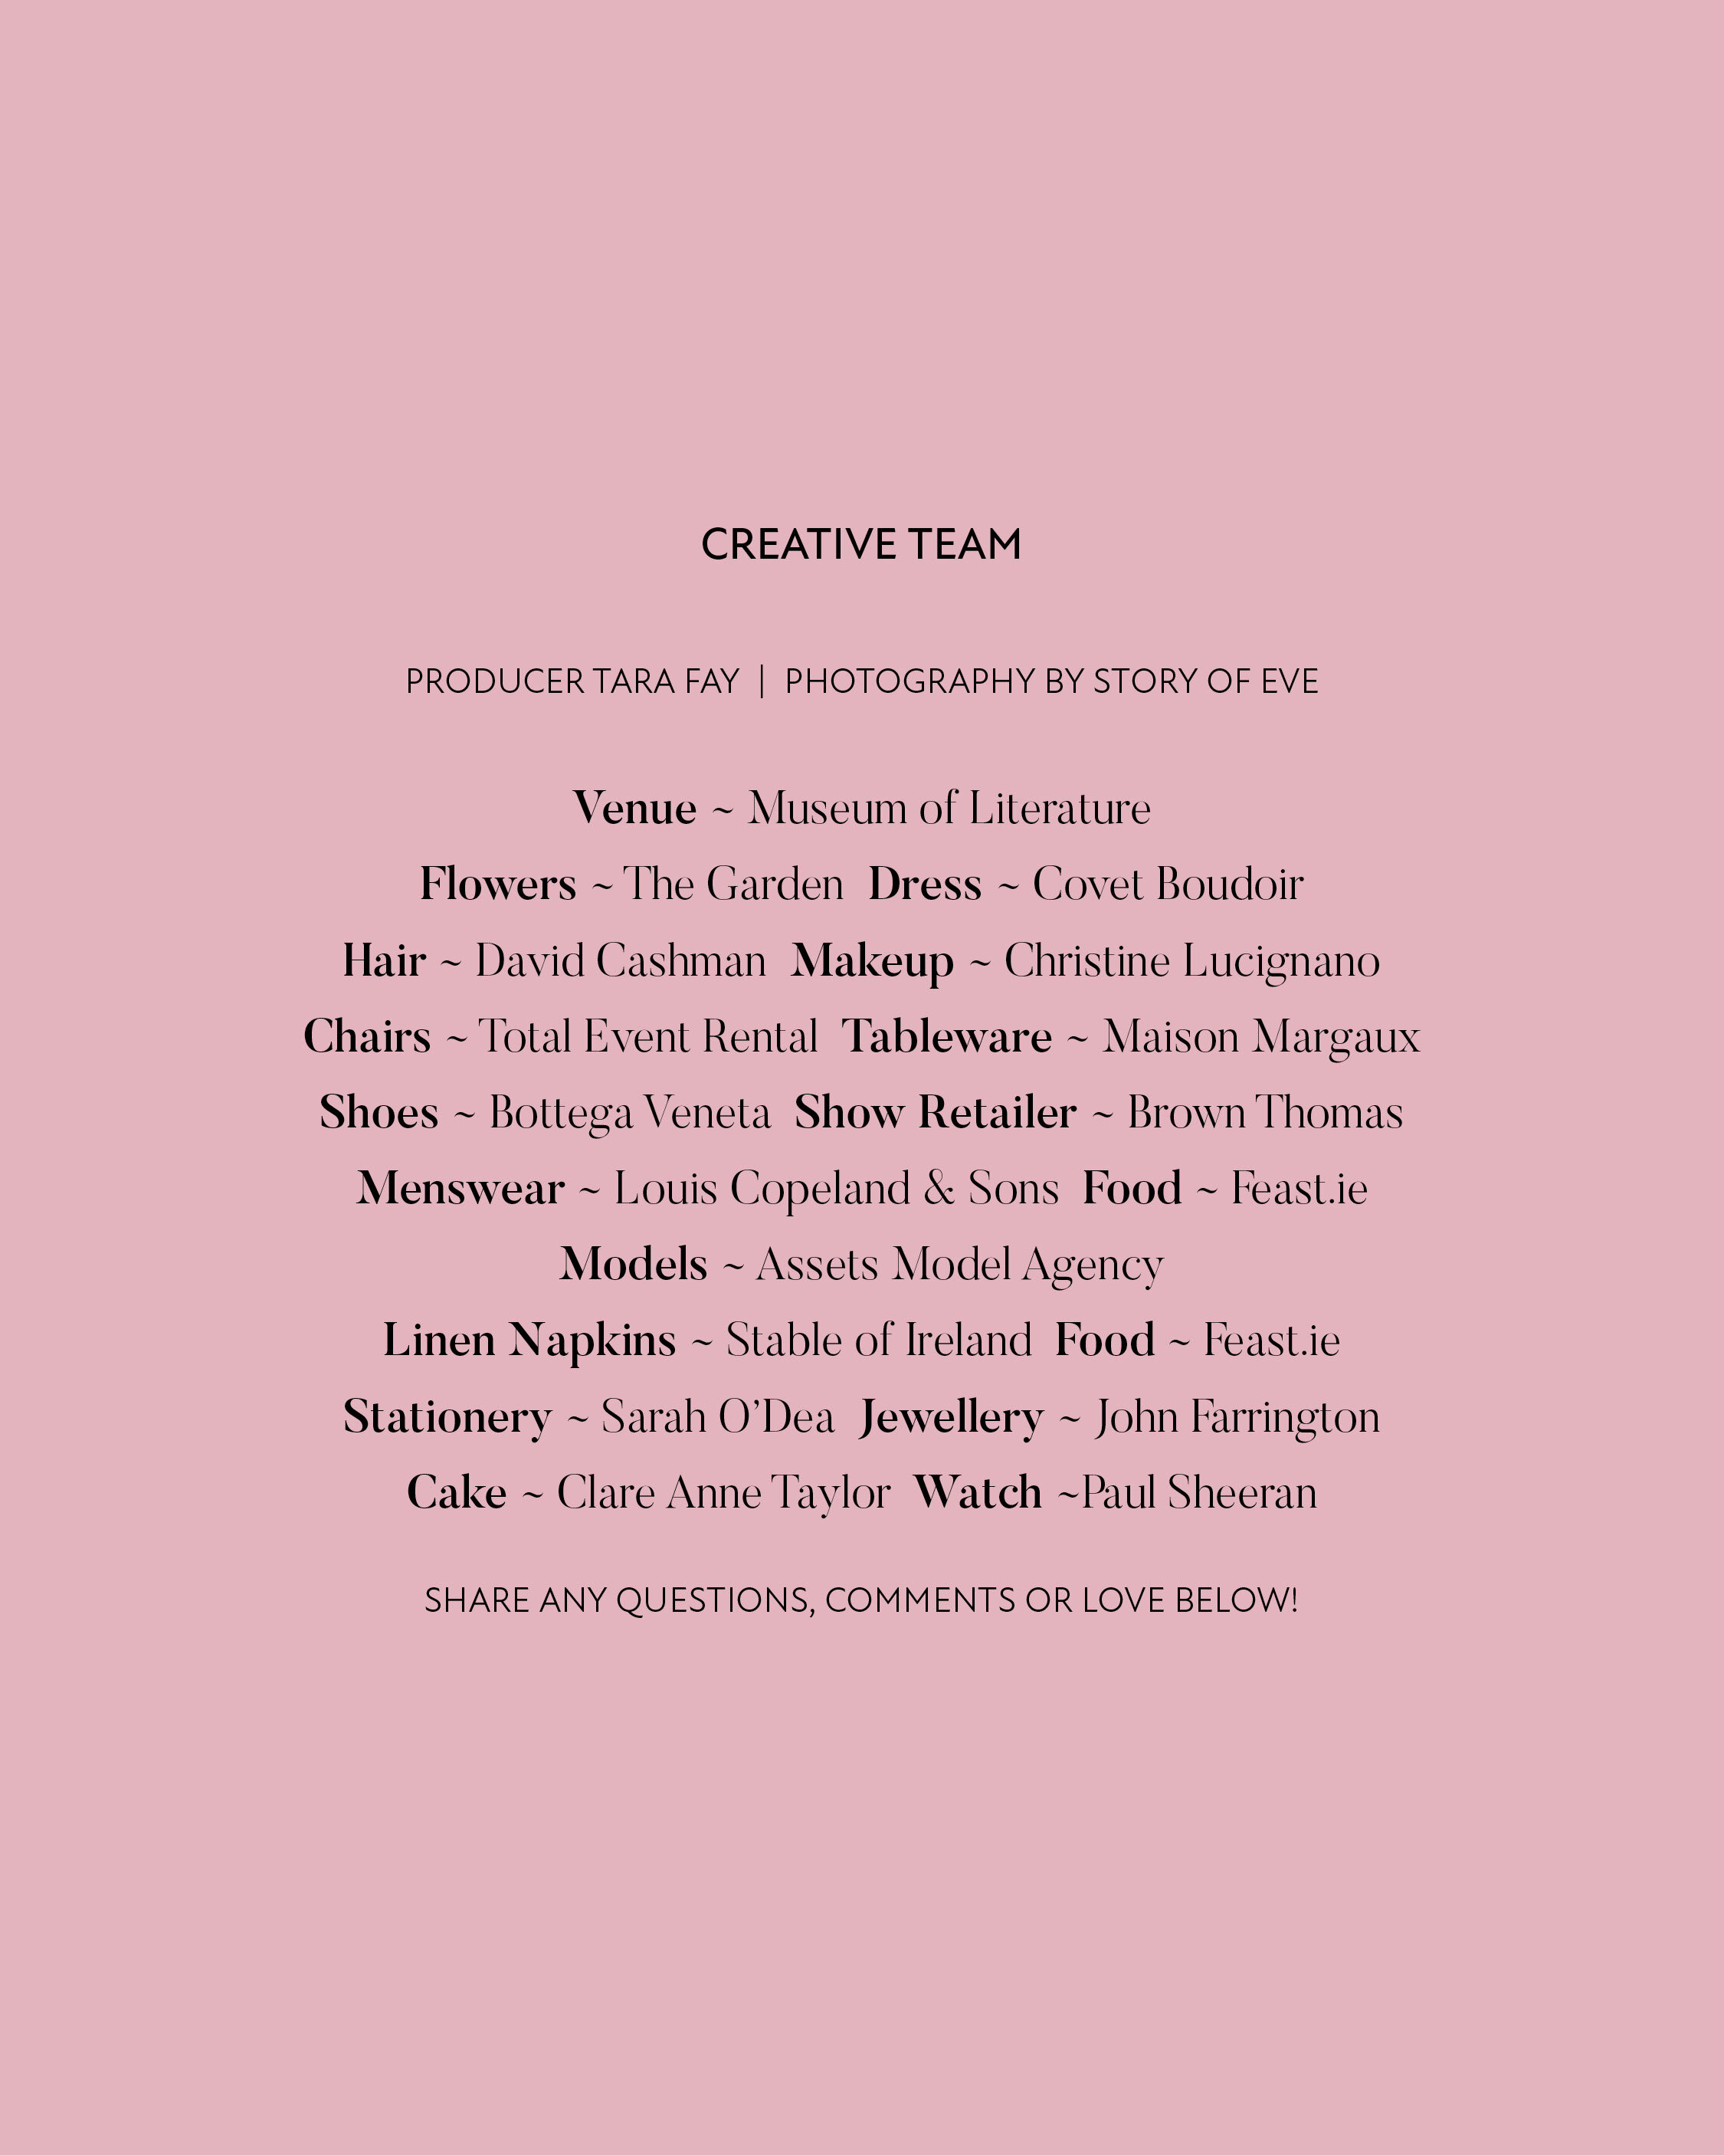 Team Credits